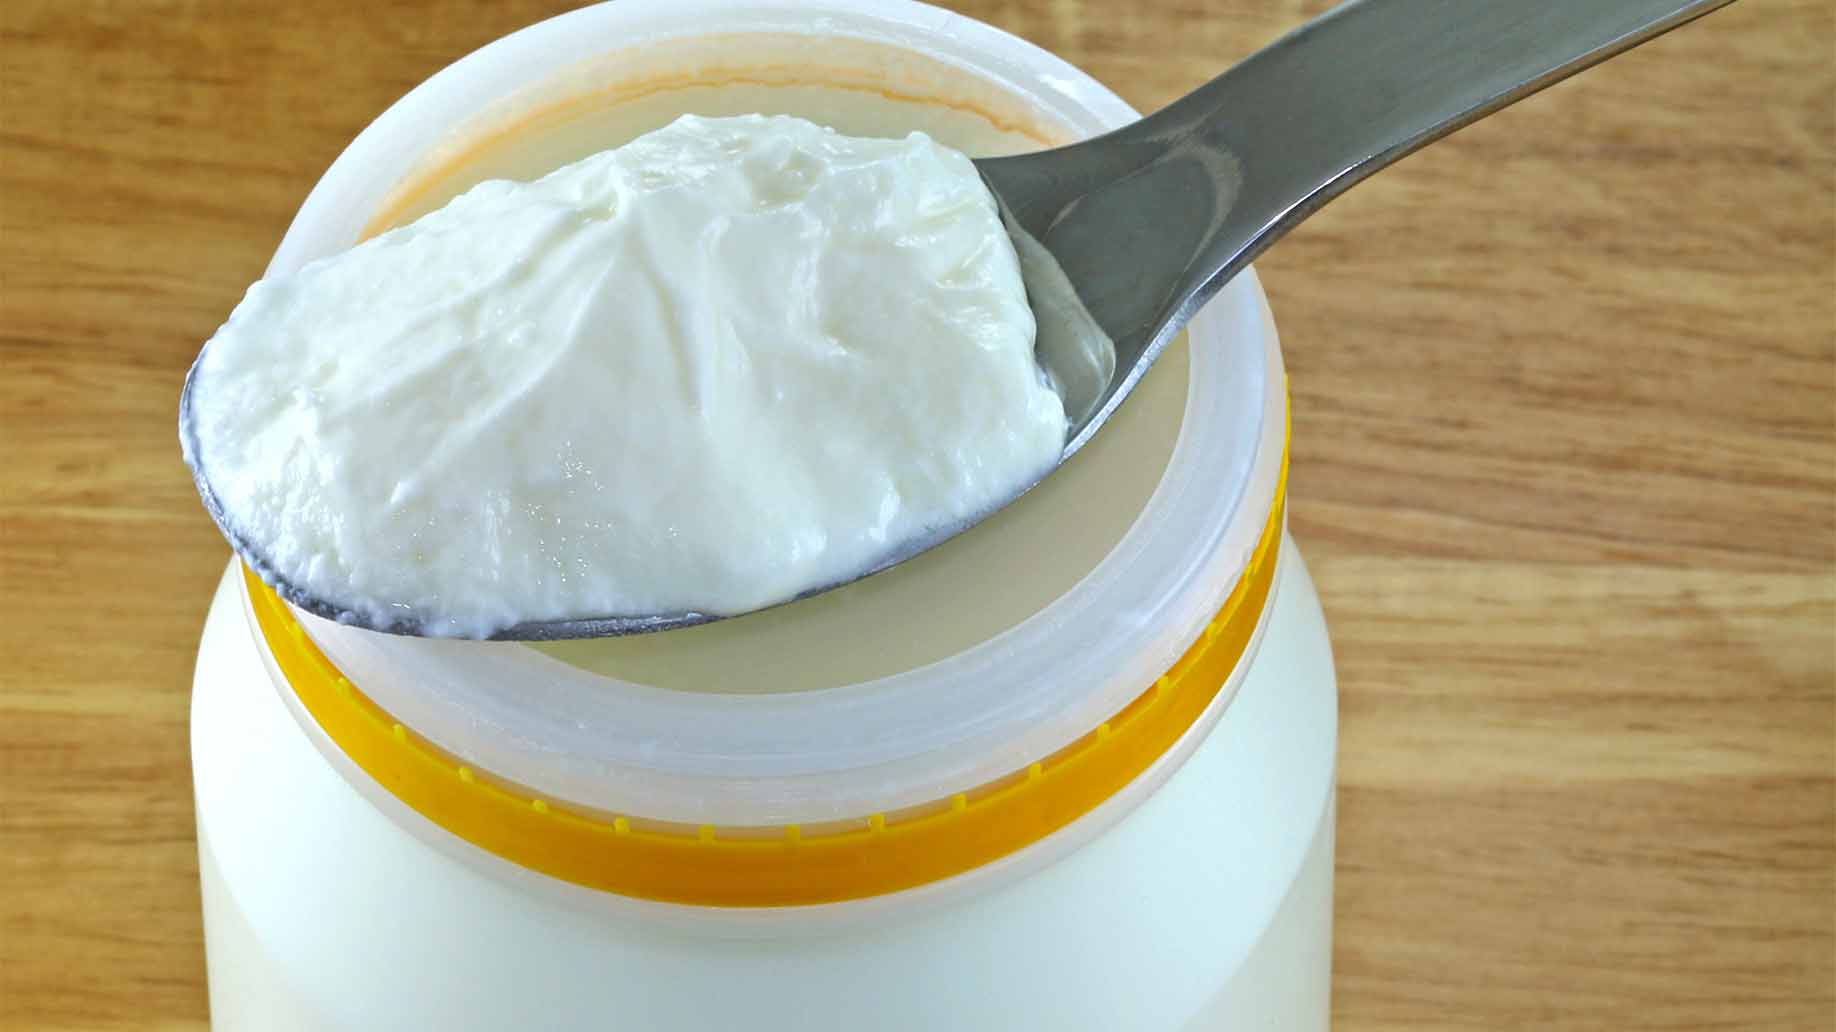 probiotics fresh white yogurt unflavored live good bacteria